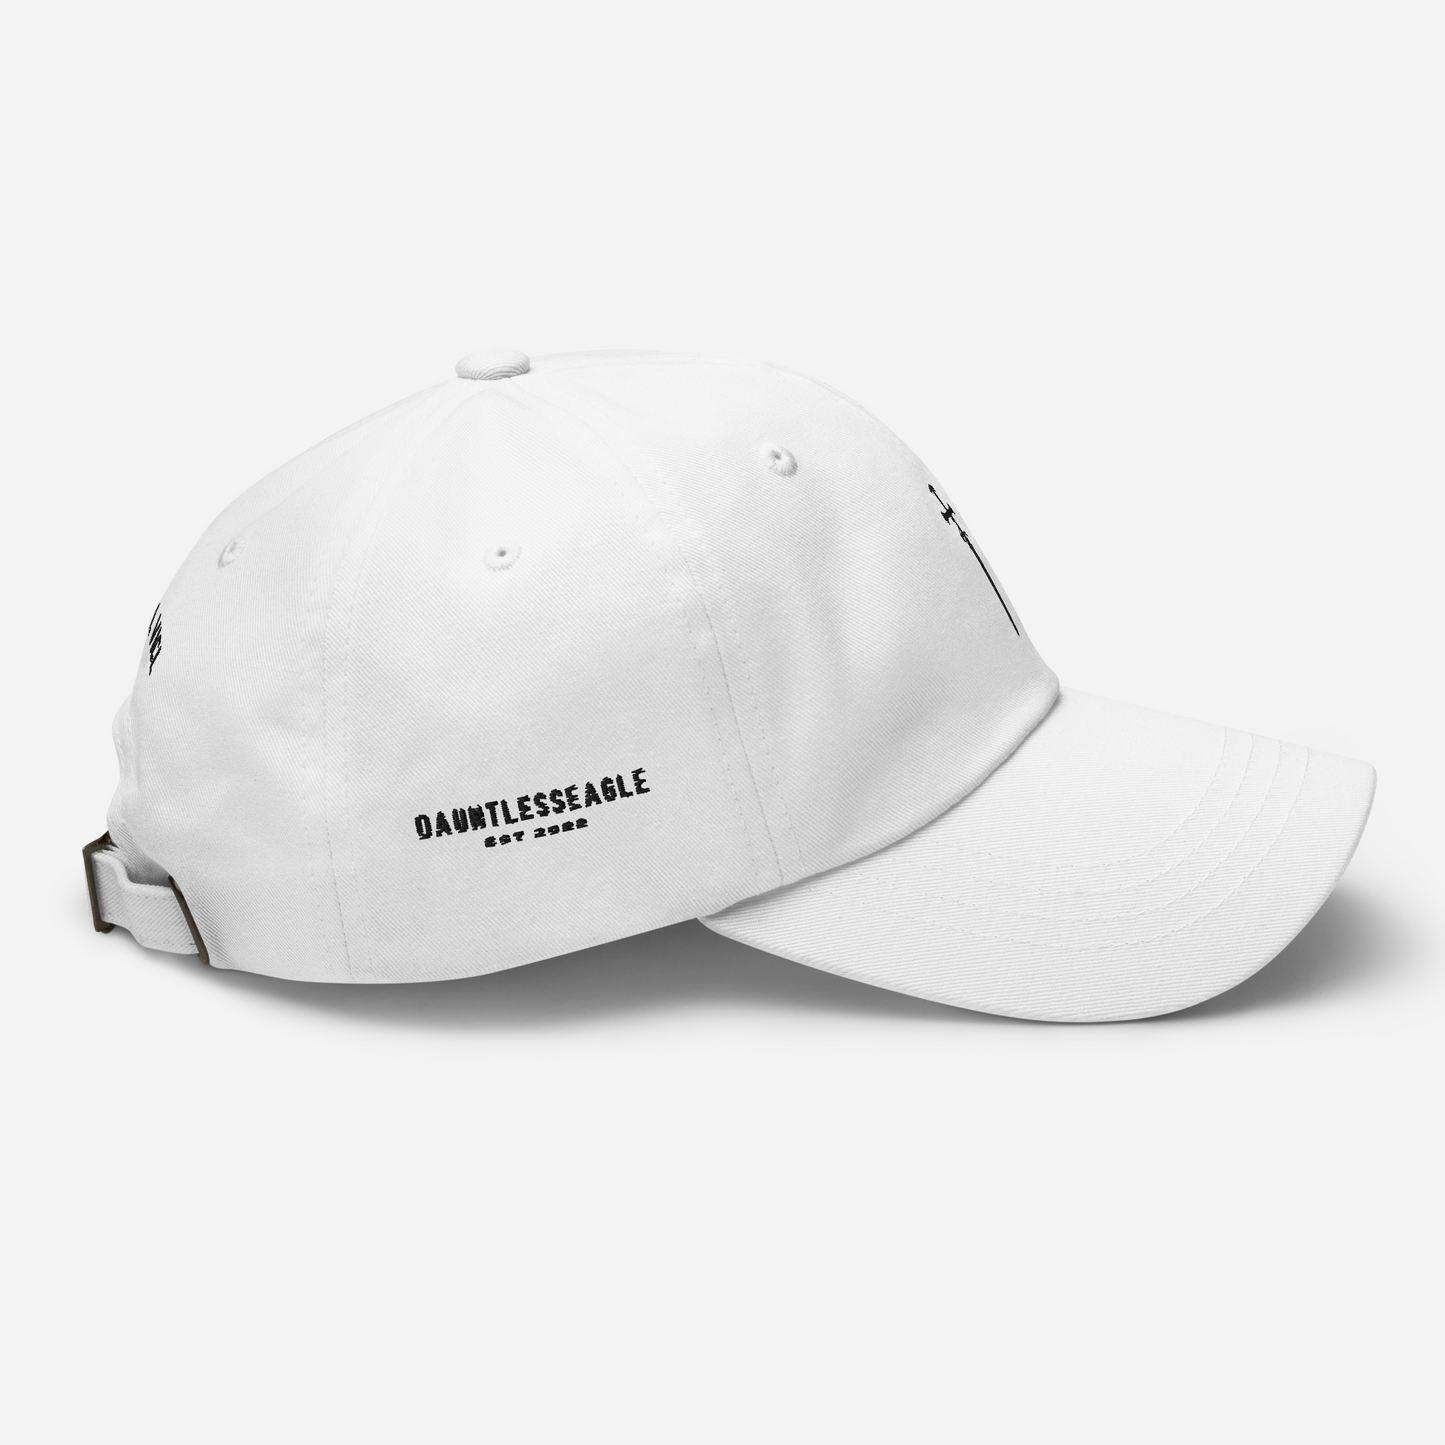 A Conqueror's Cap (White) - DauntlessEagle